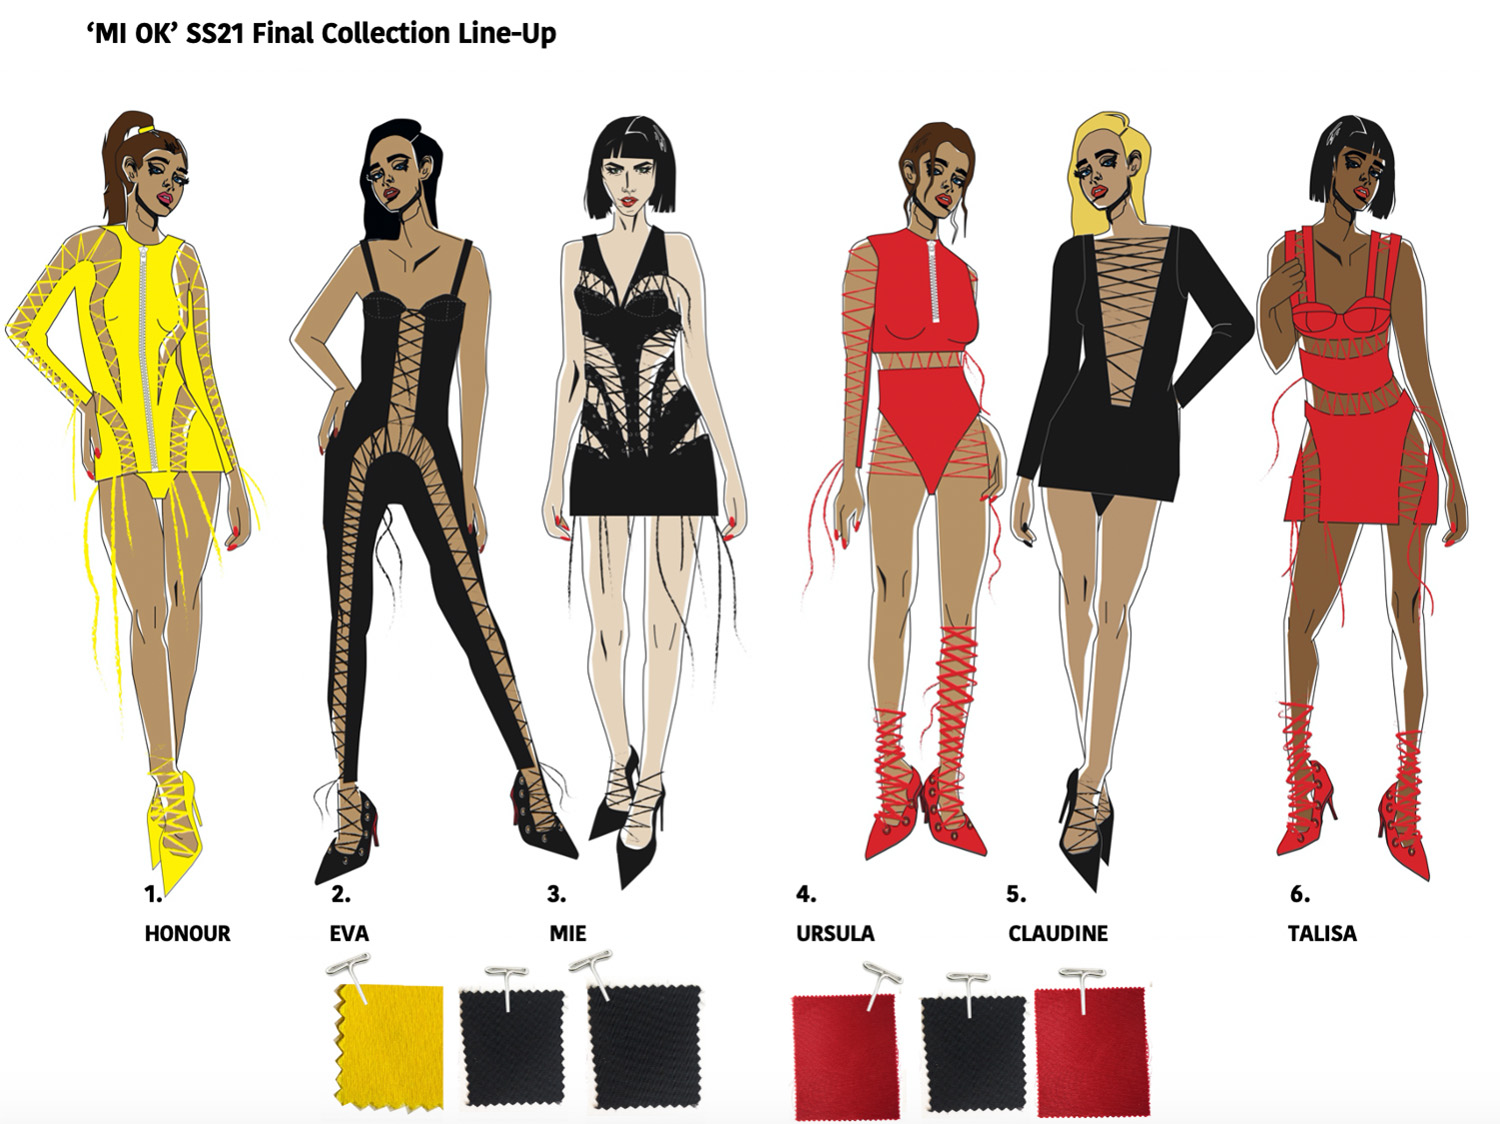 Fashion illustrations